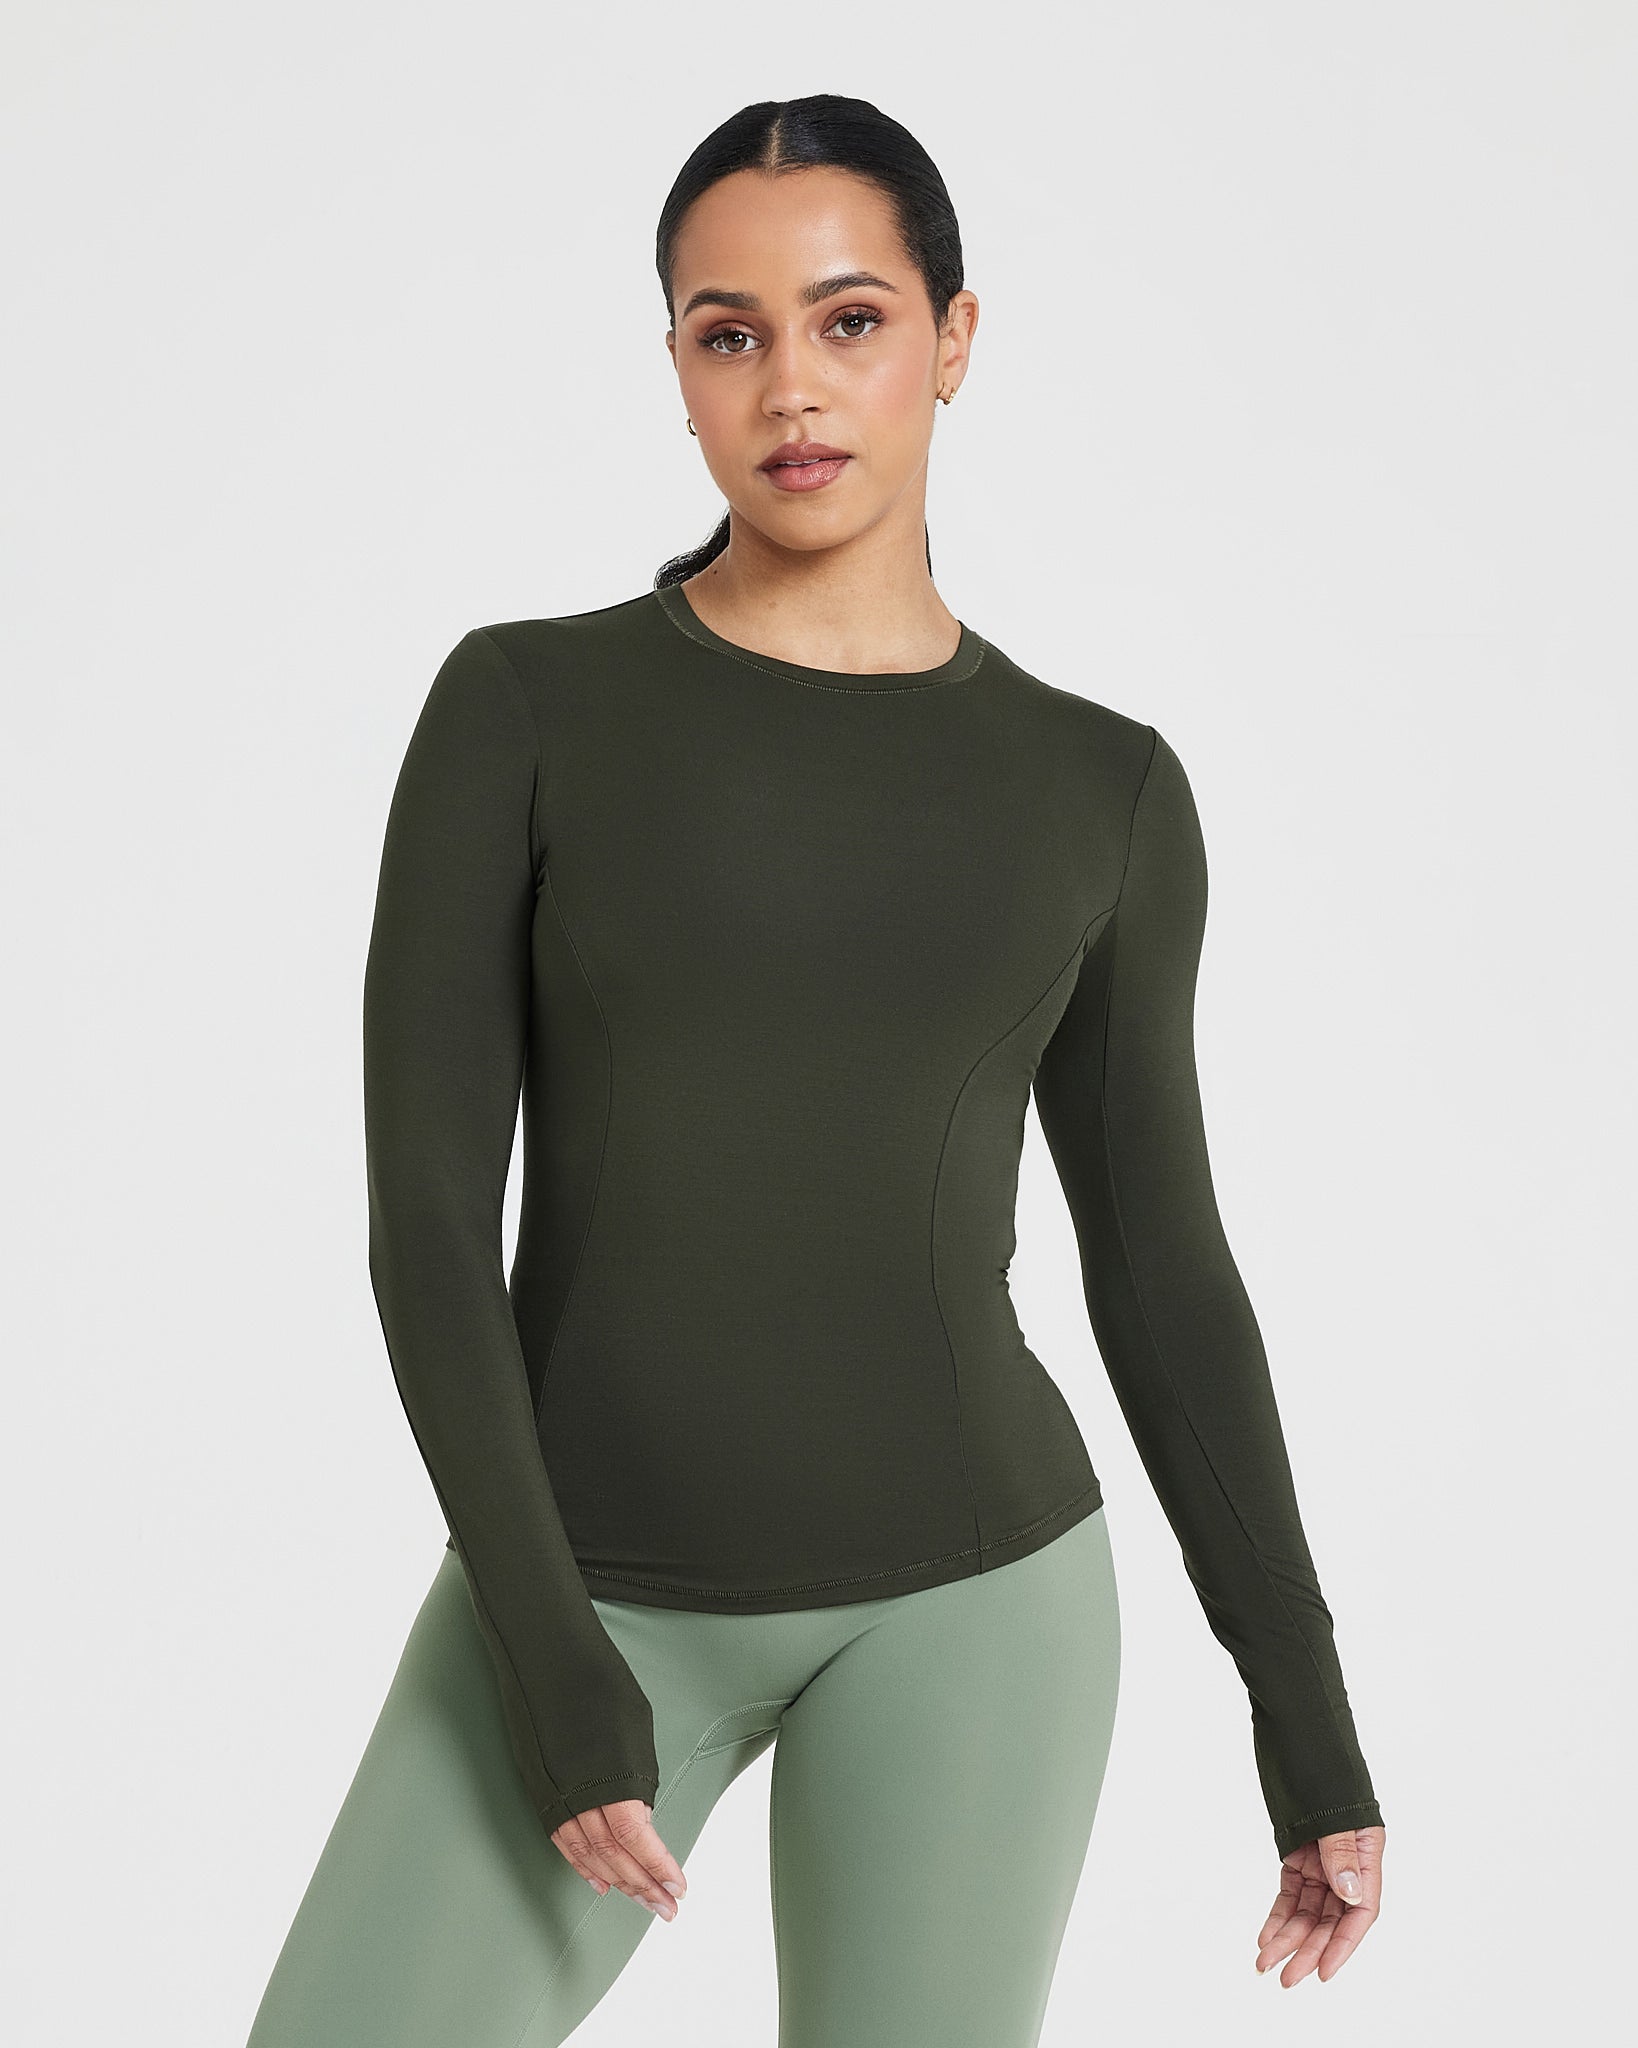 Khaki Green Long Sleeve Top Women's | Oner Active US